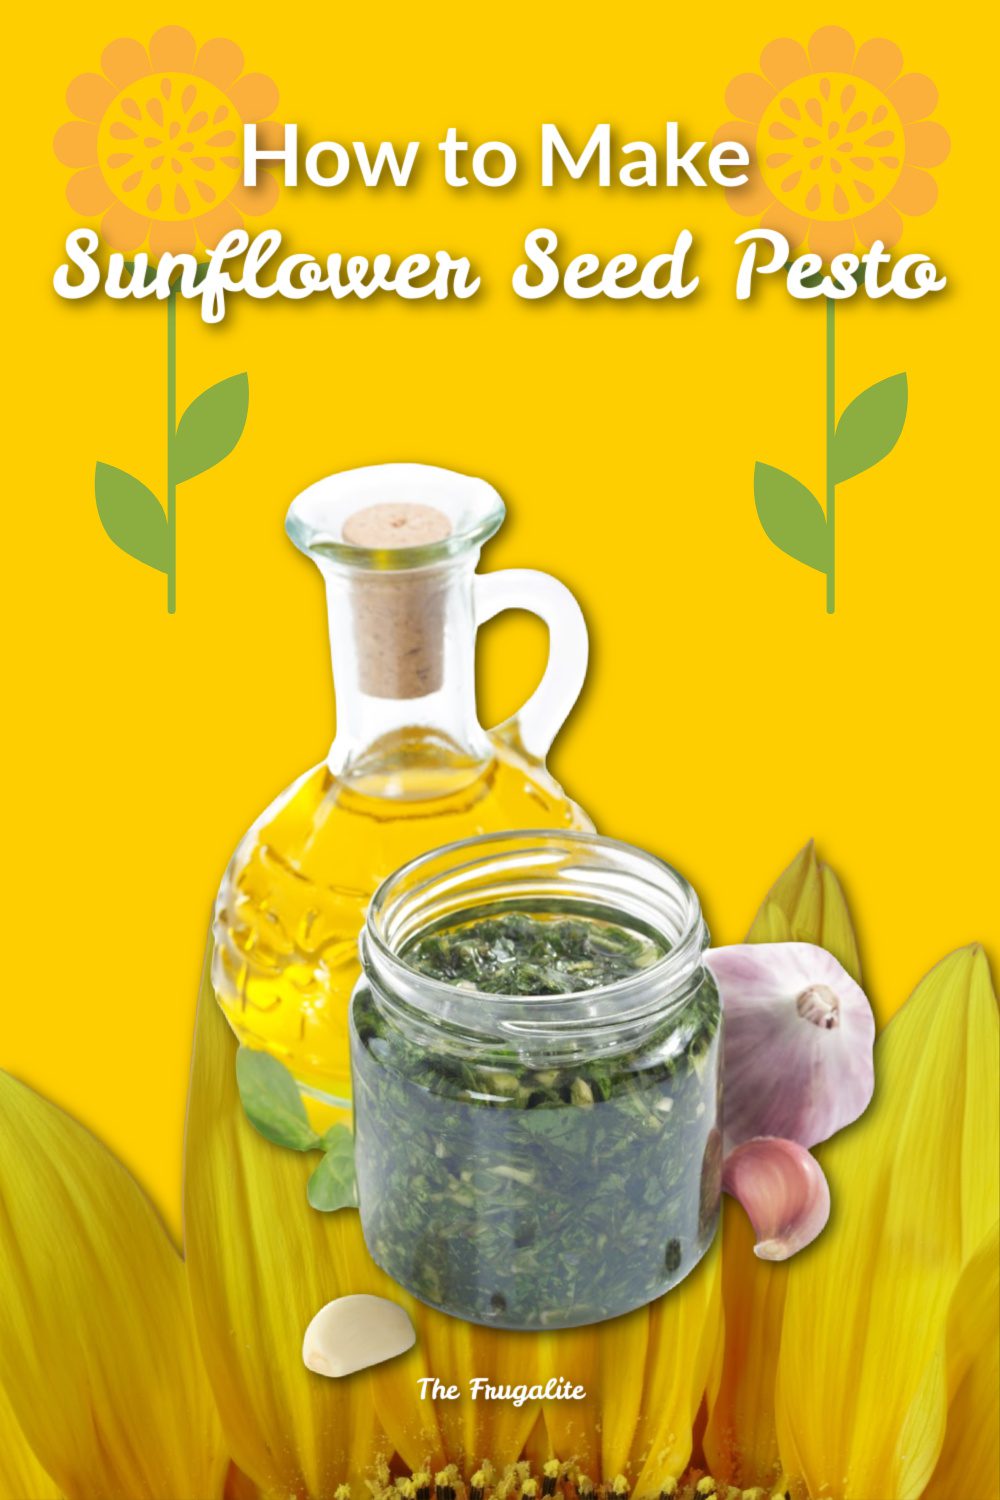 How to Make Sunflower Seed Pesto